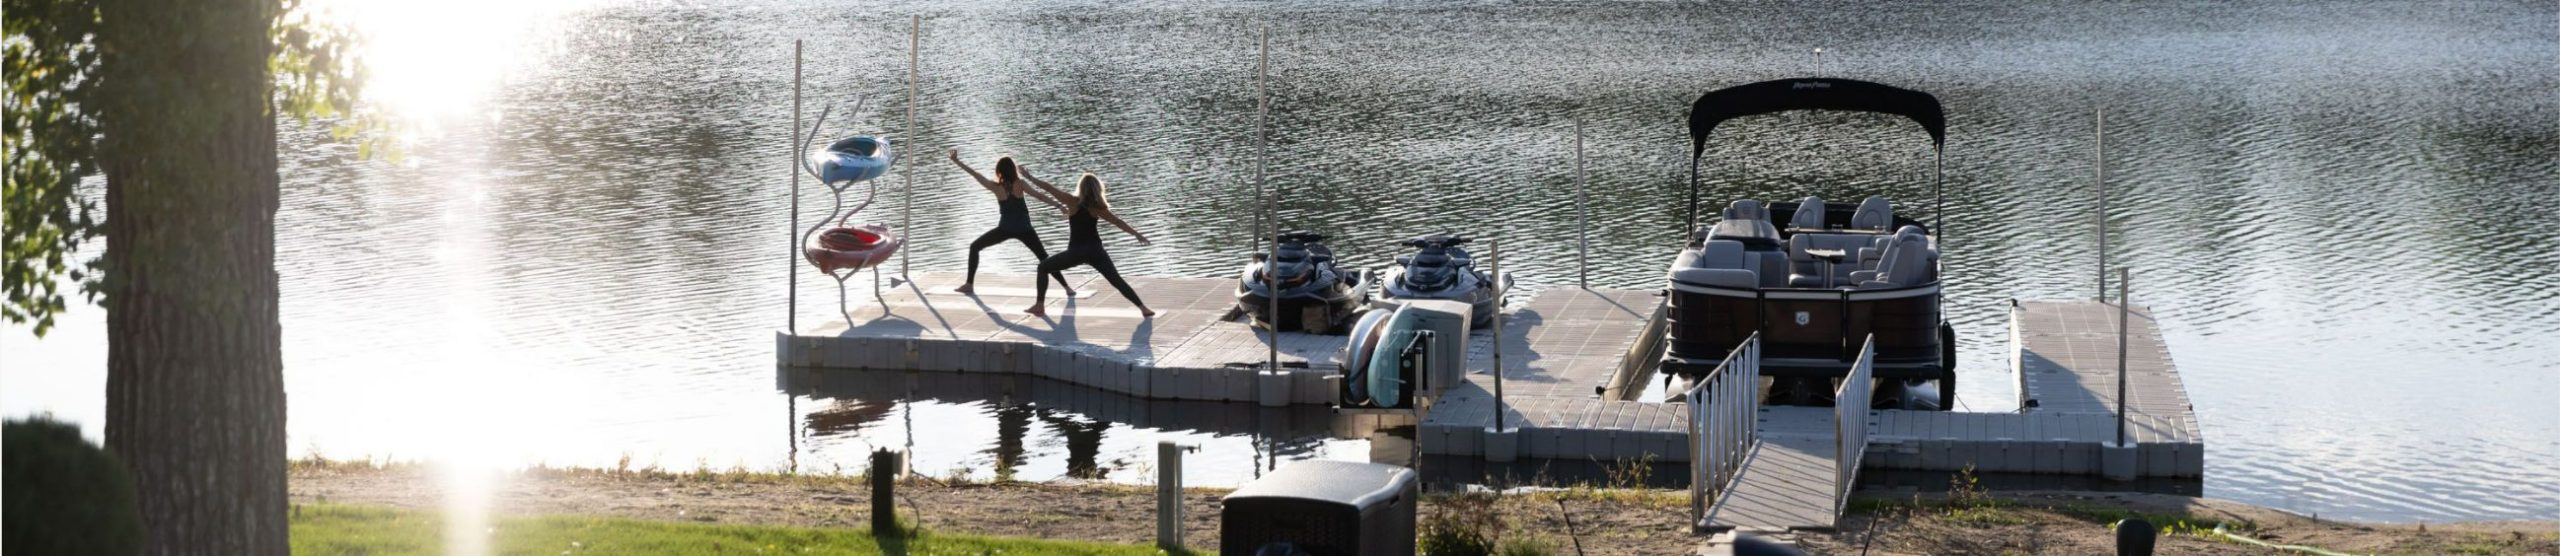 2 women performing yoga on boat dock